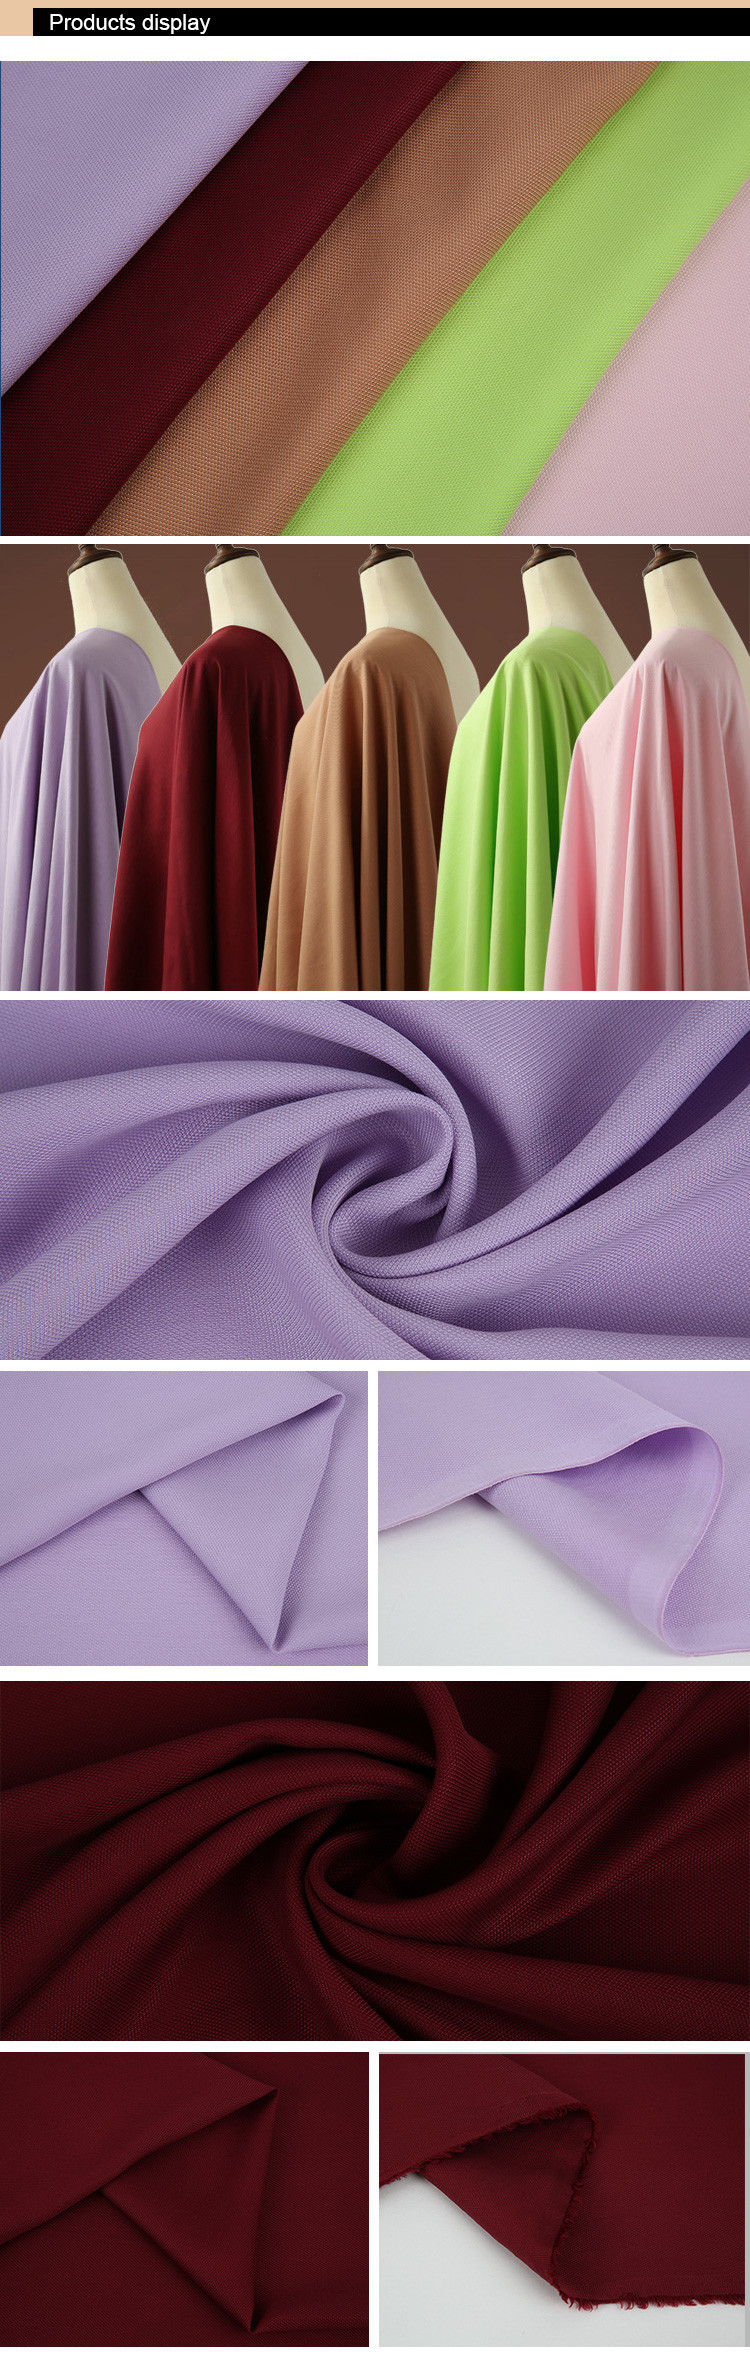 E10 Tencel Jacquard 30D Woven Fabric Tencel Bedding Set